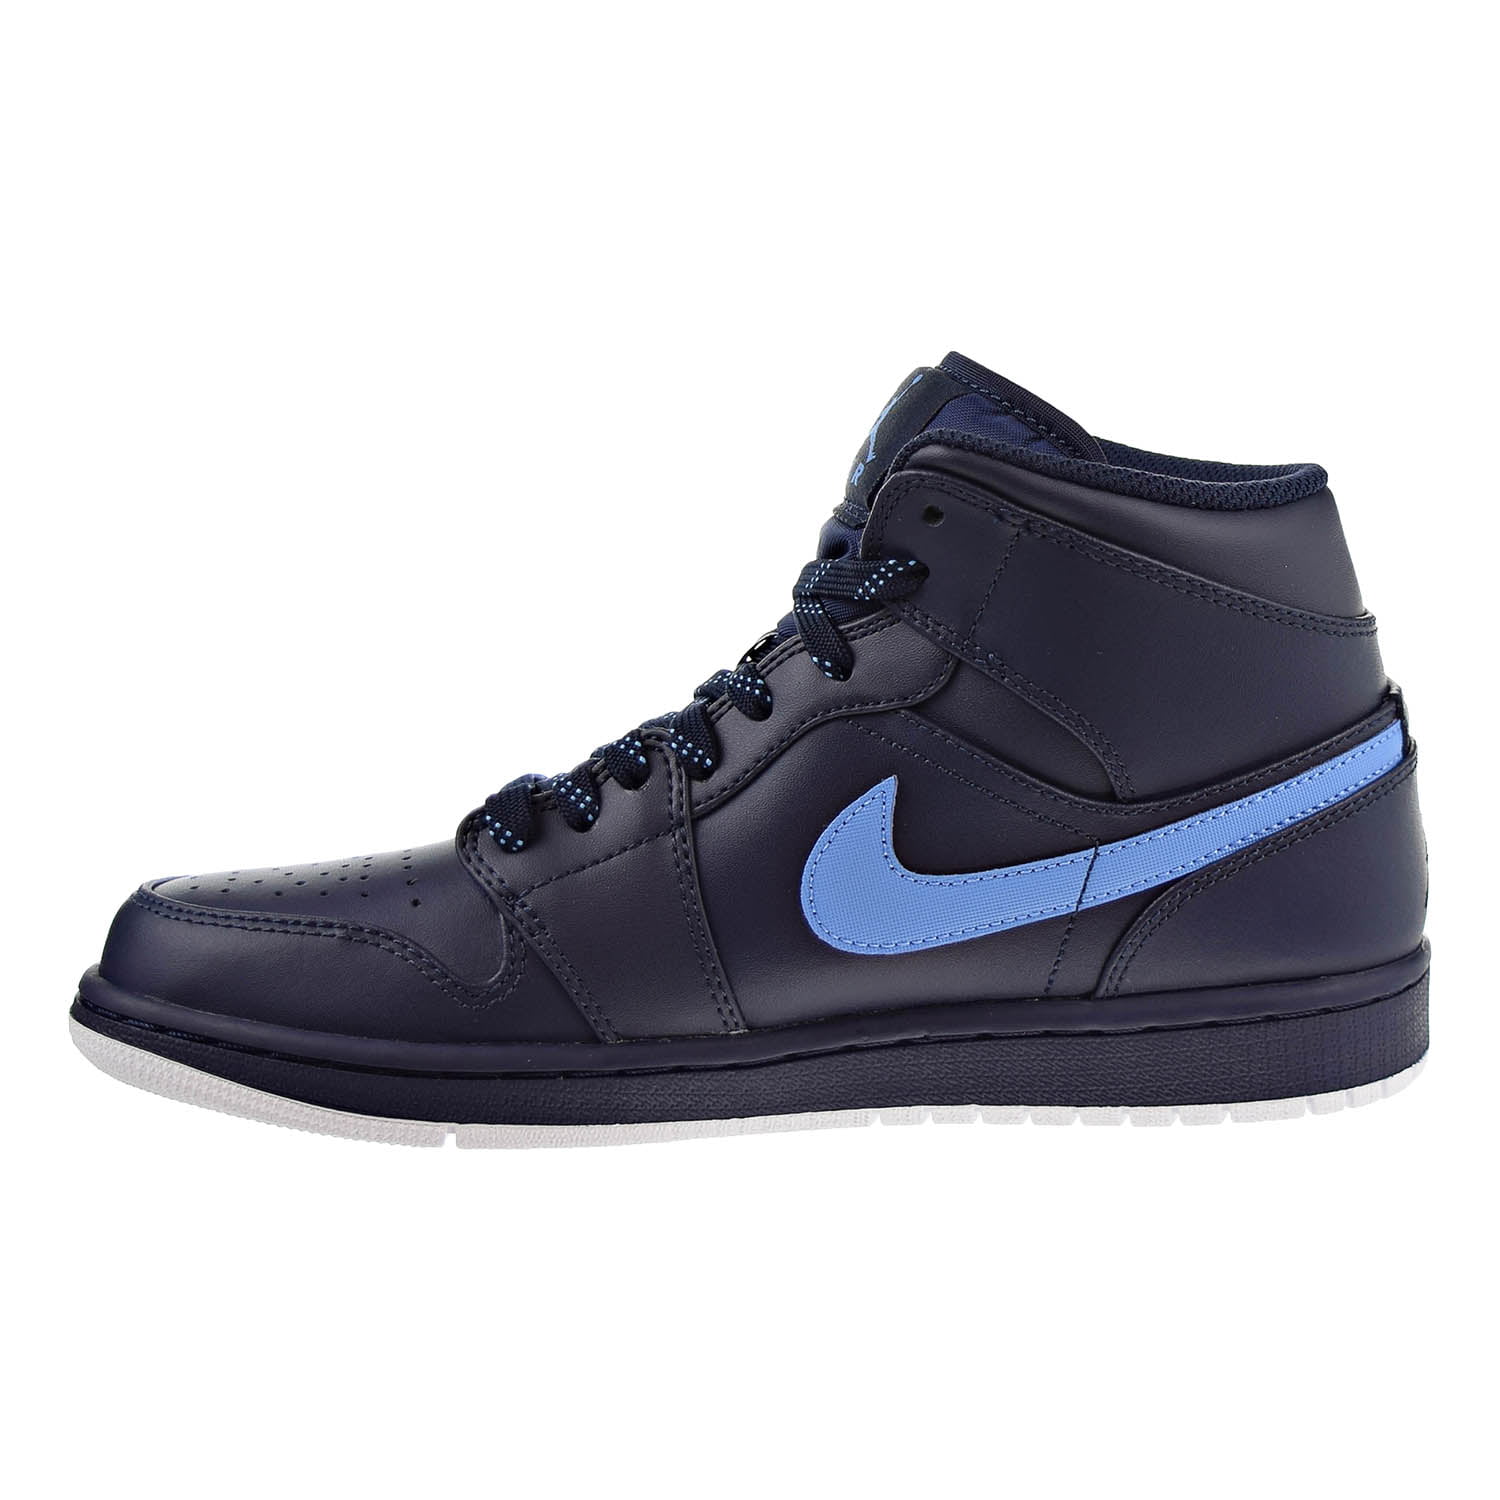 Air Jordan 1 Mid Men's Shoes Obsidian/University Blue-White 